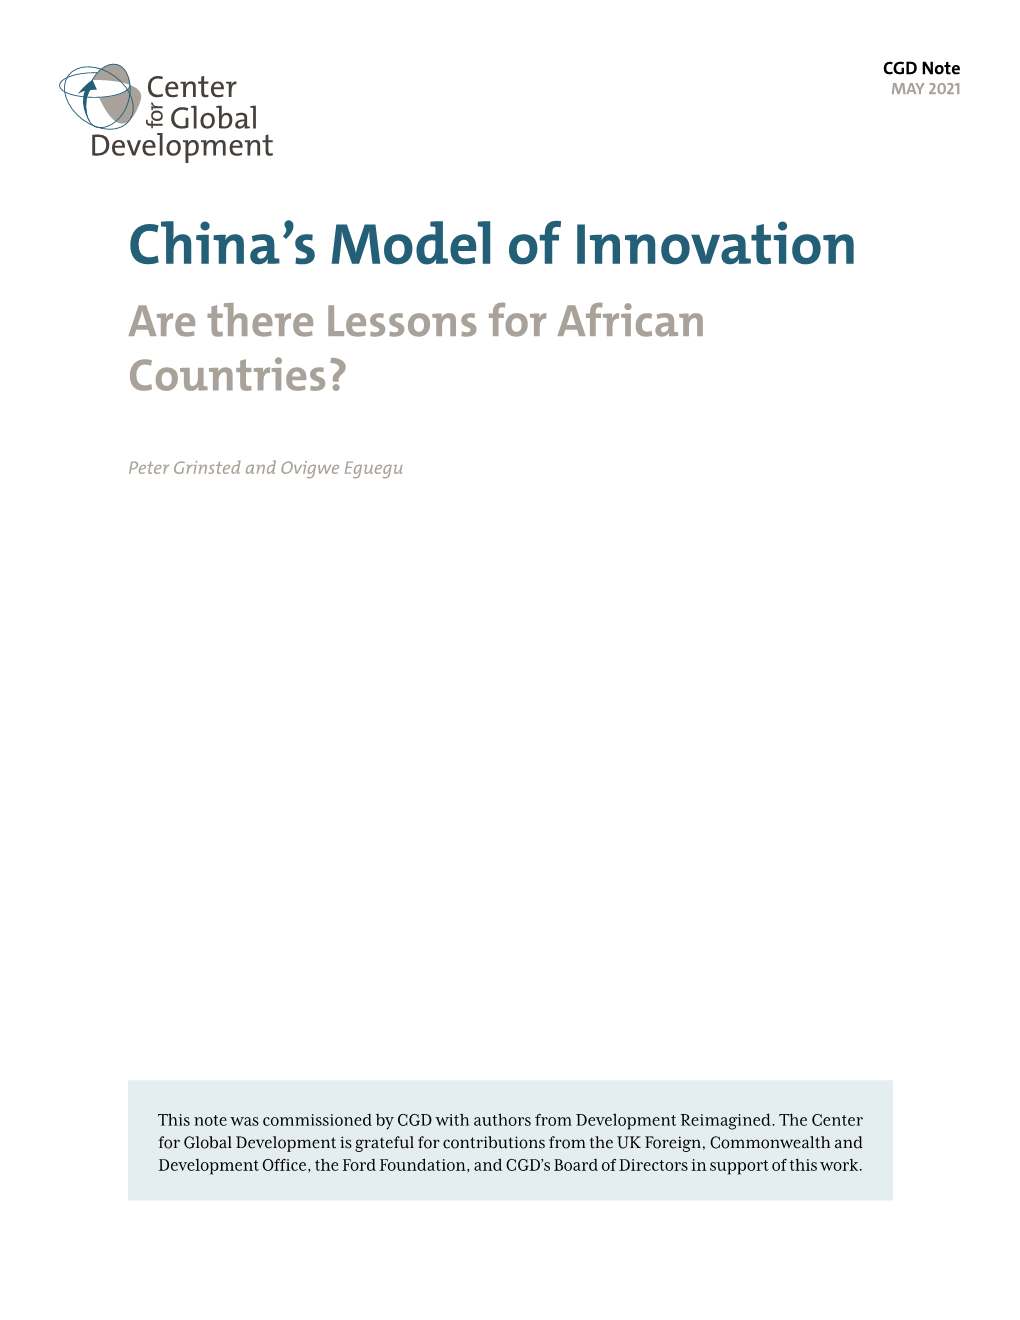 China's Model of Innovation